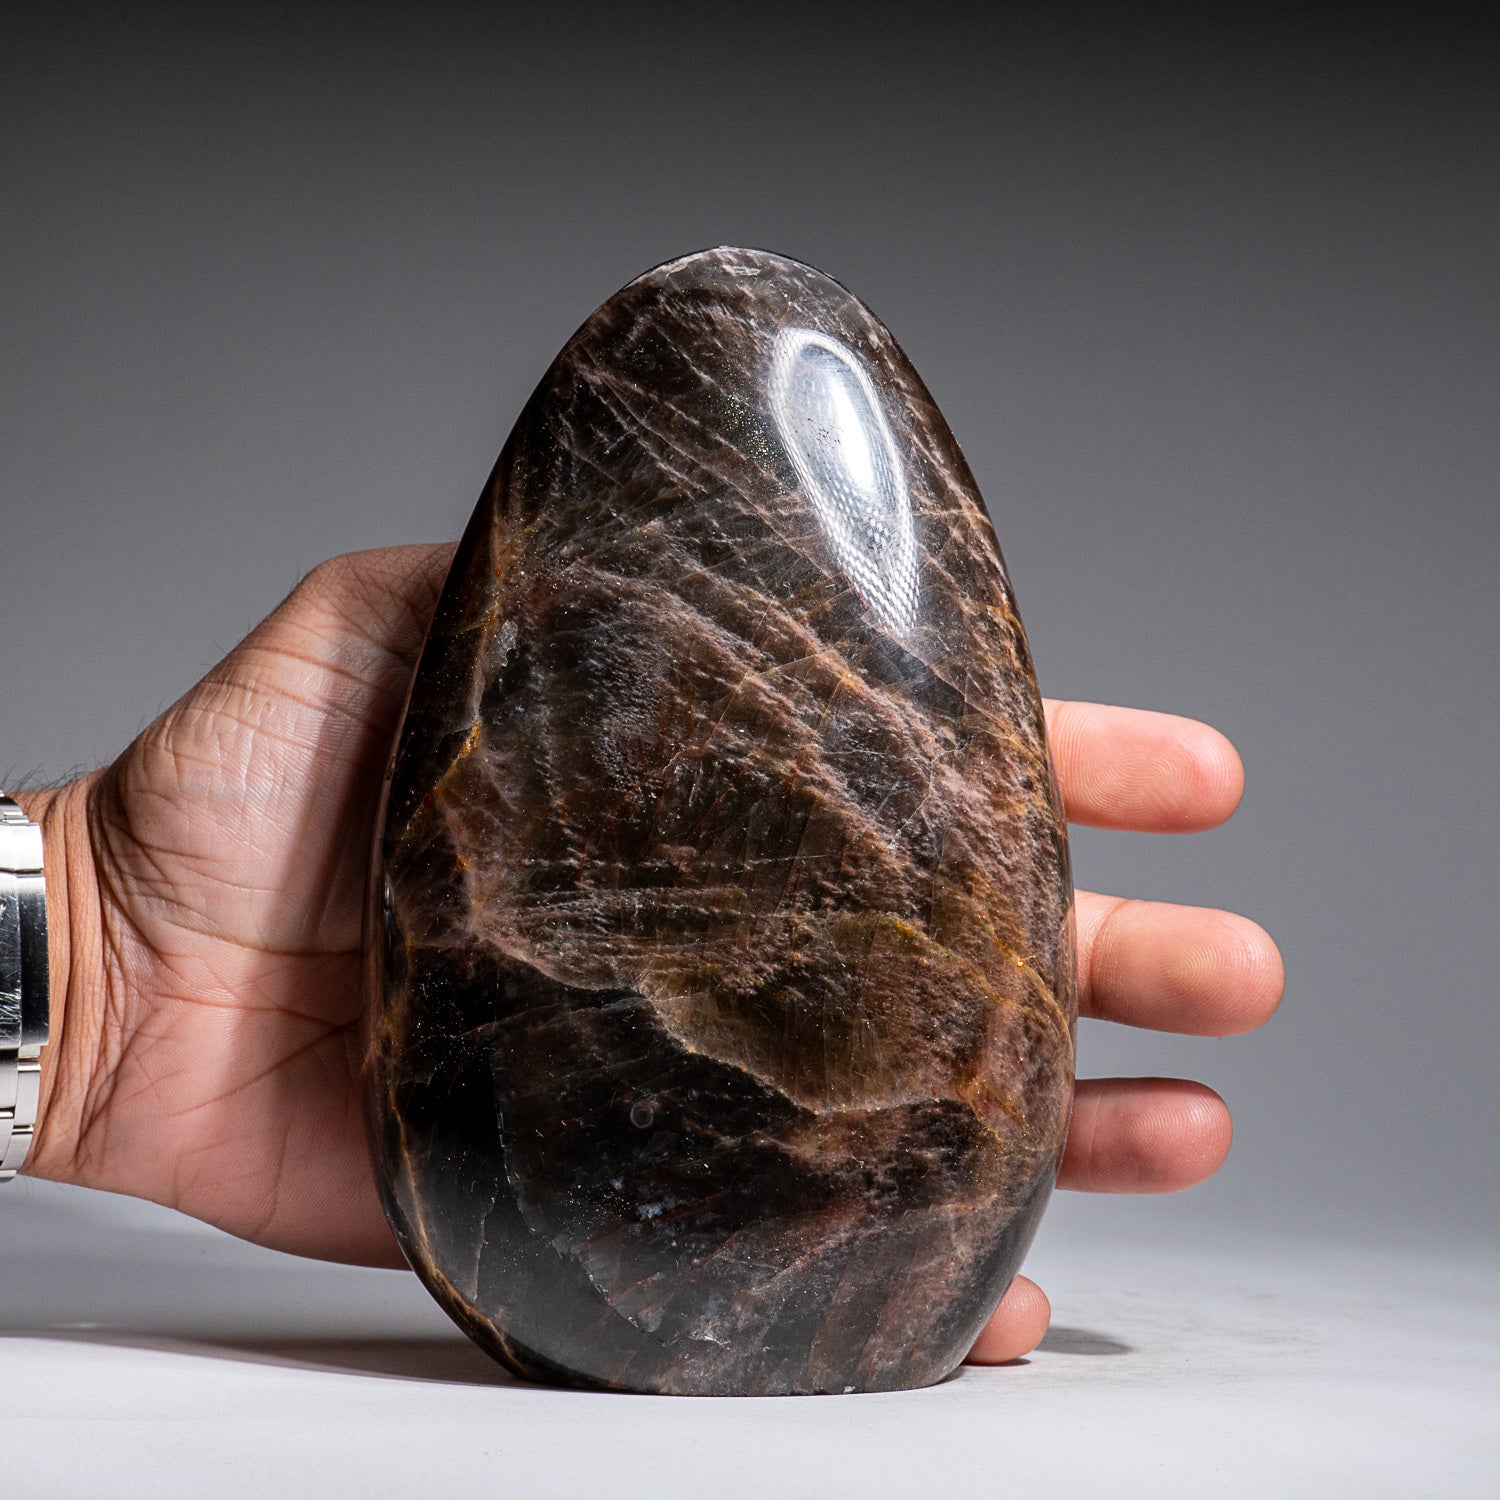 Genuine Polished Black Moonstone Freeform From Madagascar (3.2 lbs)